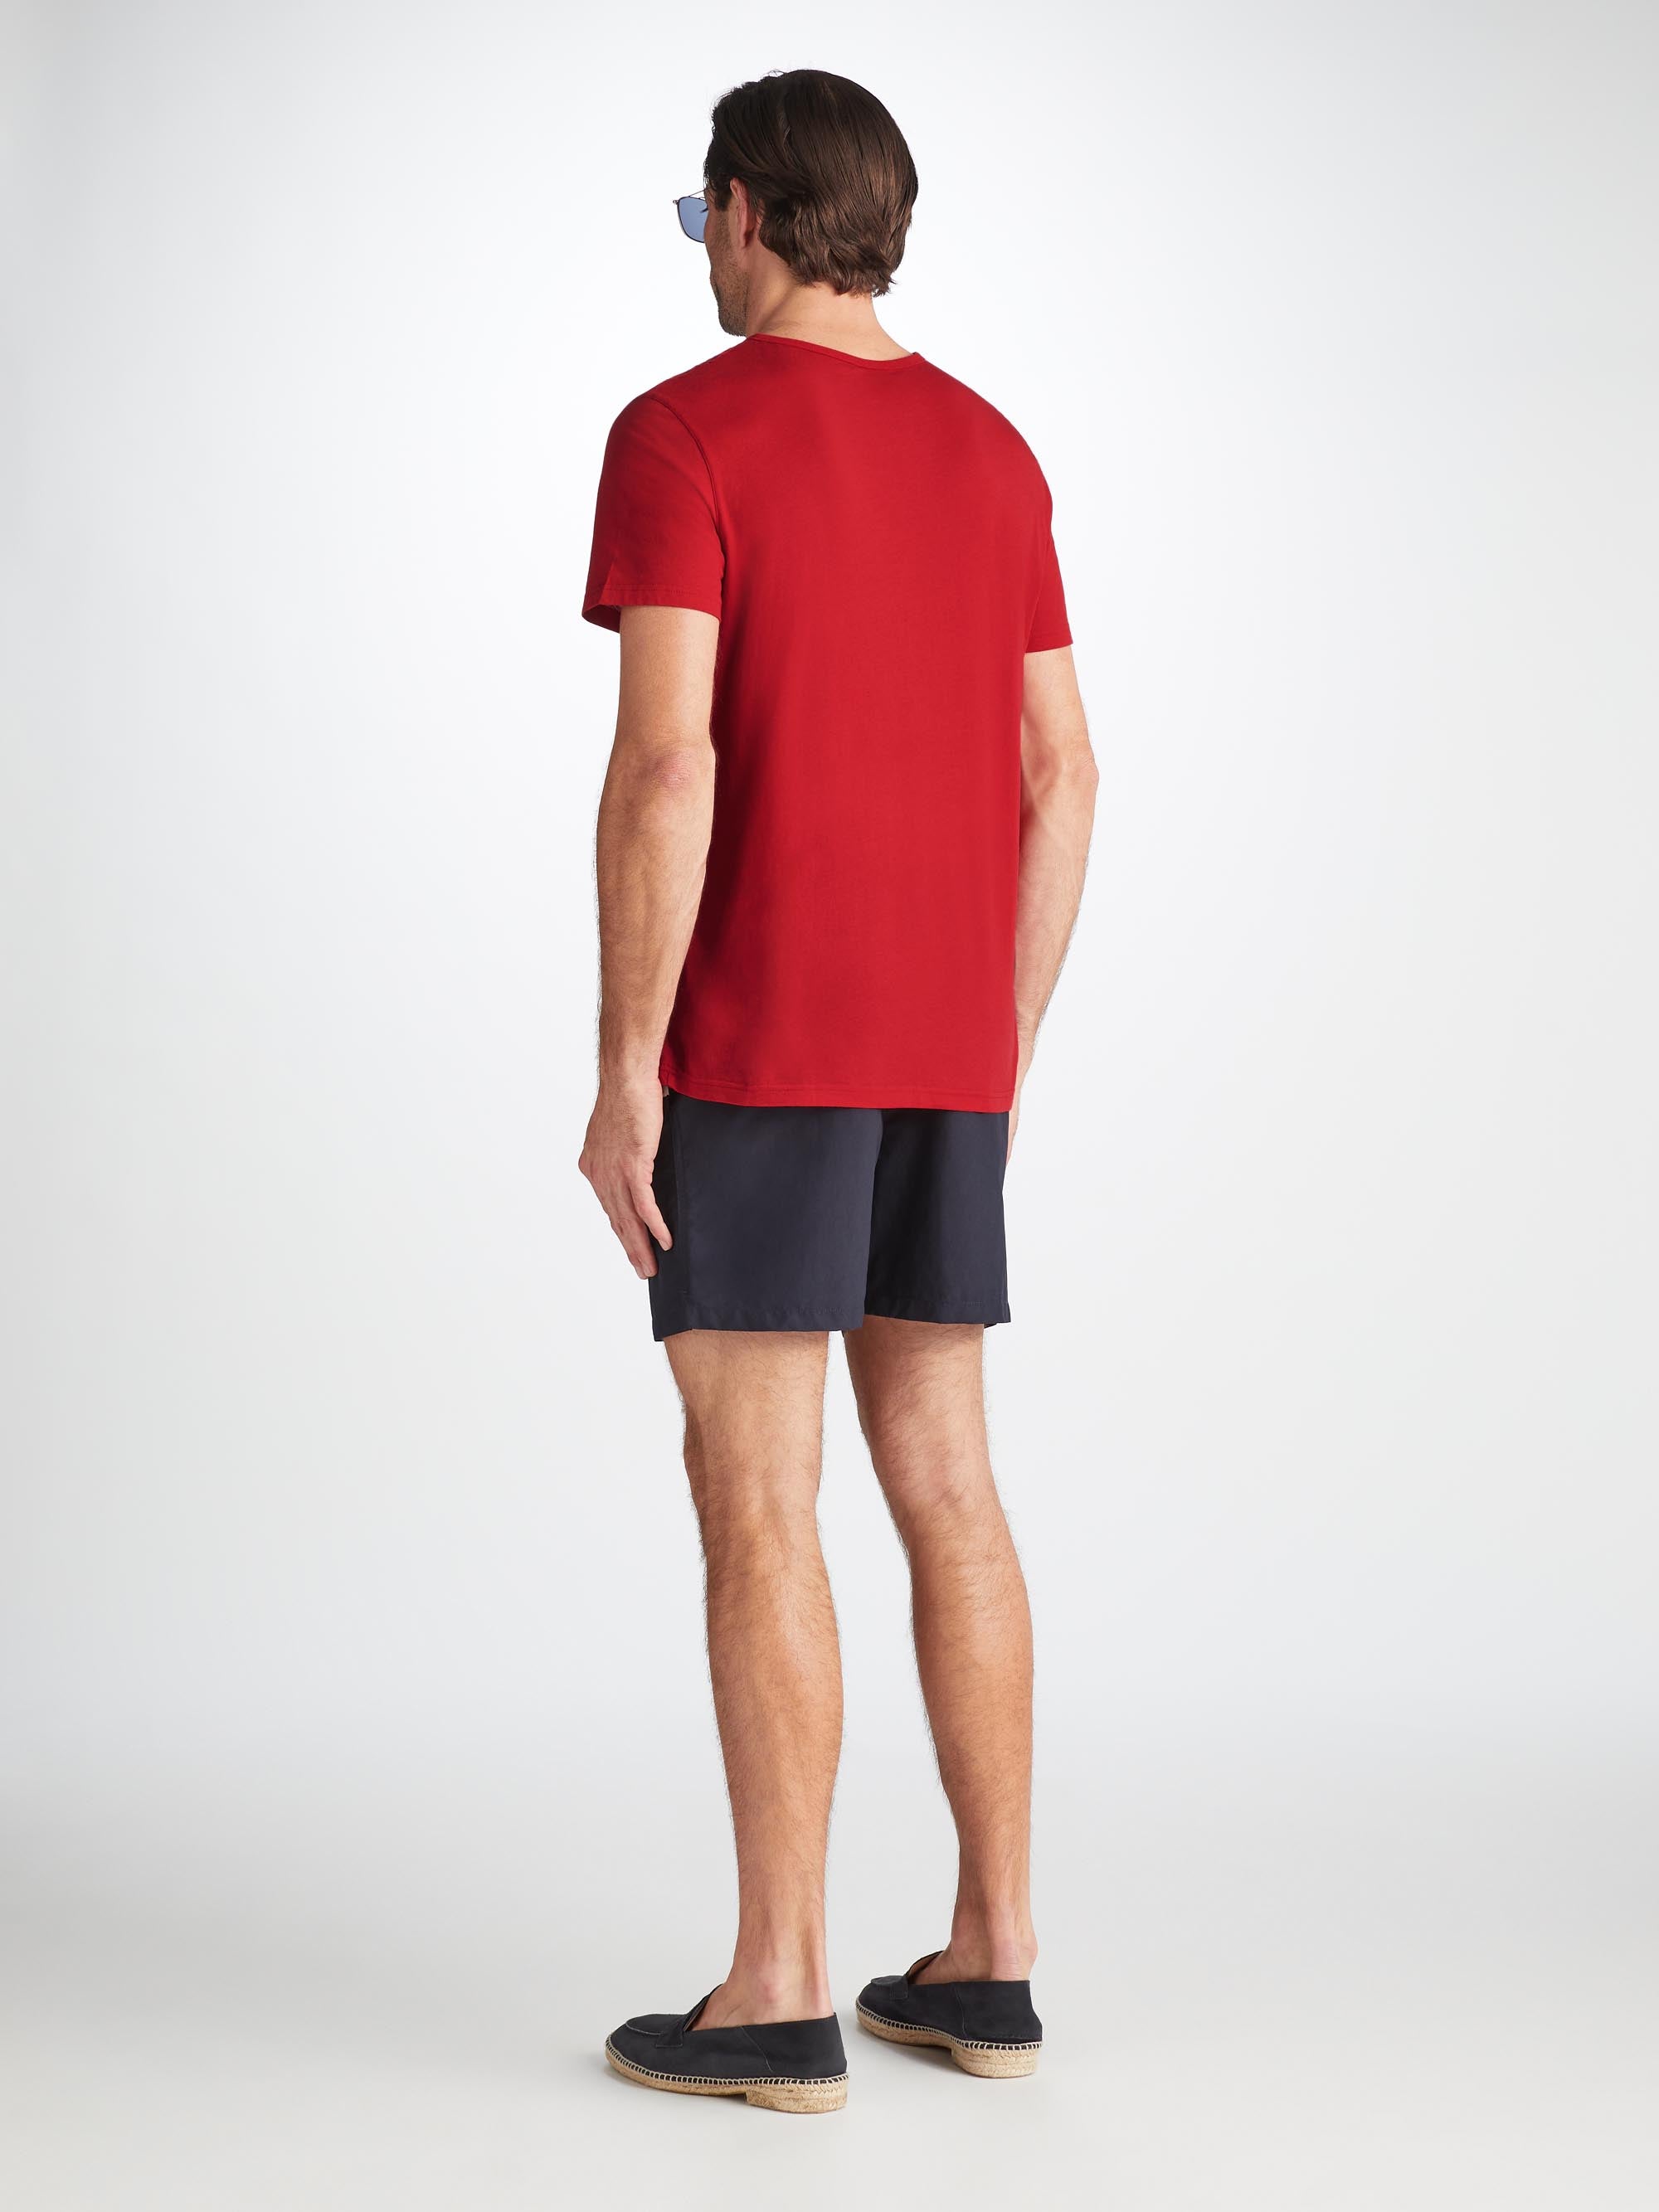 Men's Short Sleeve T-Shirt Riley 2 Pima Cotton Red